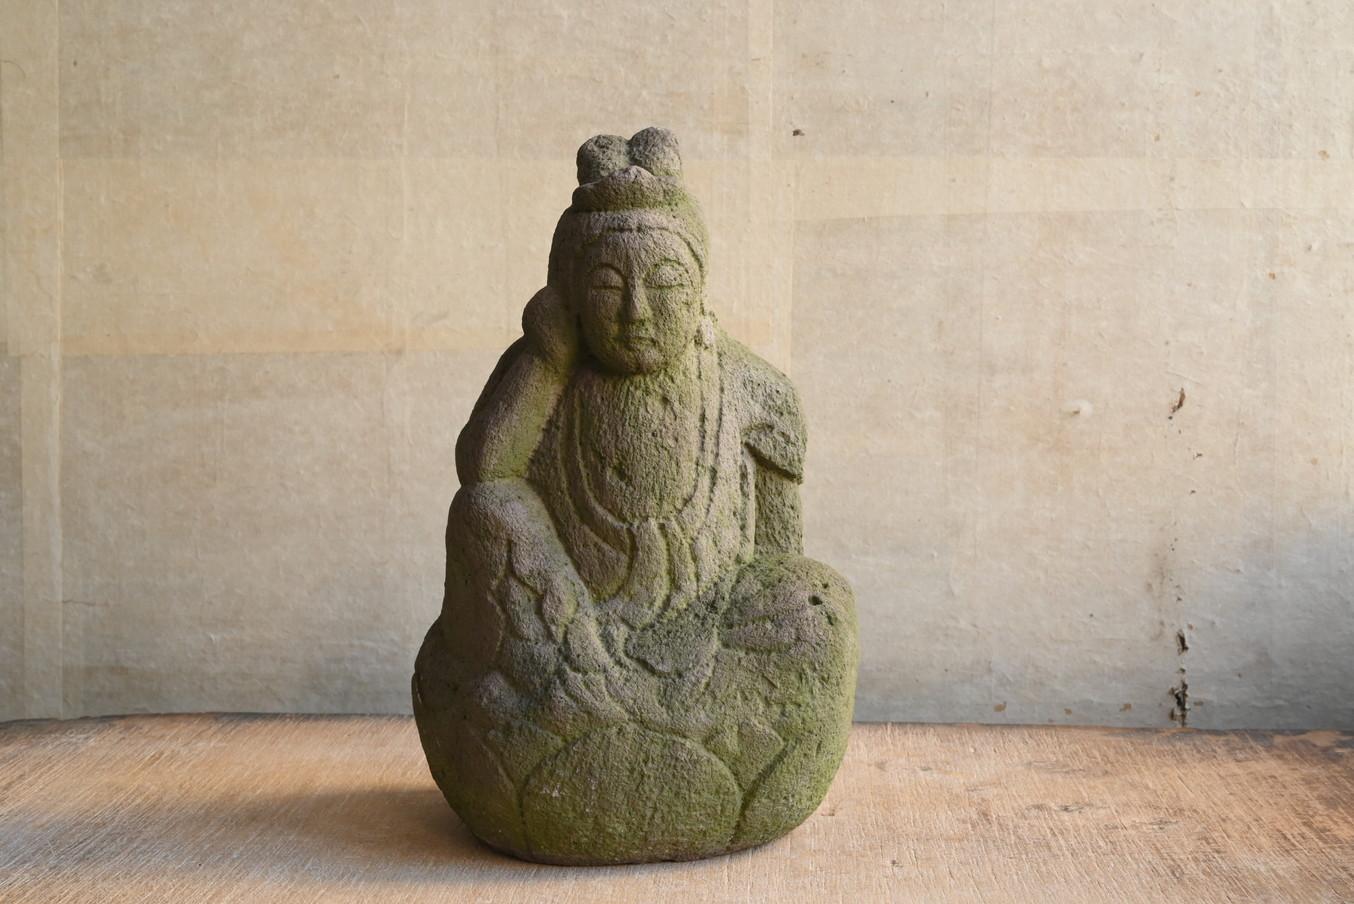 Hand-Carved Japanese antique stone Buddha/1750-1850/Edo period/Nyoirin Kannon Bodhisattva